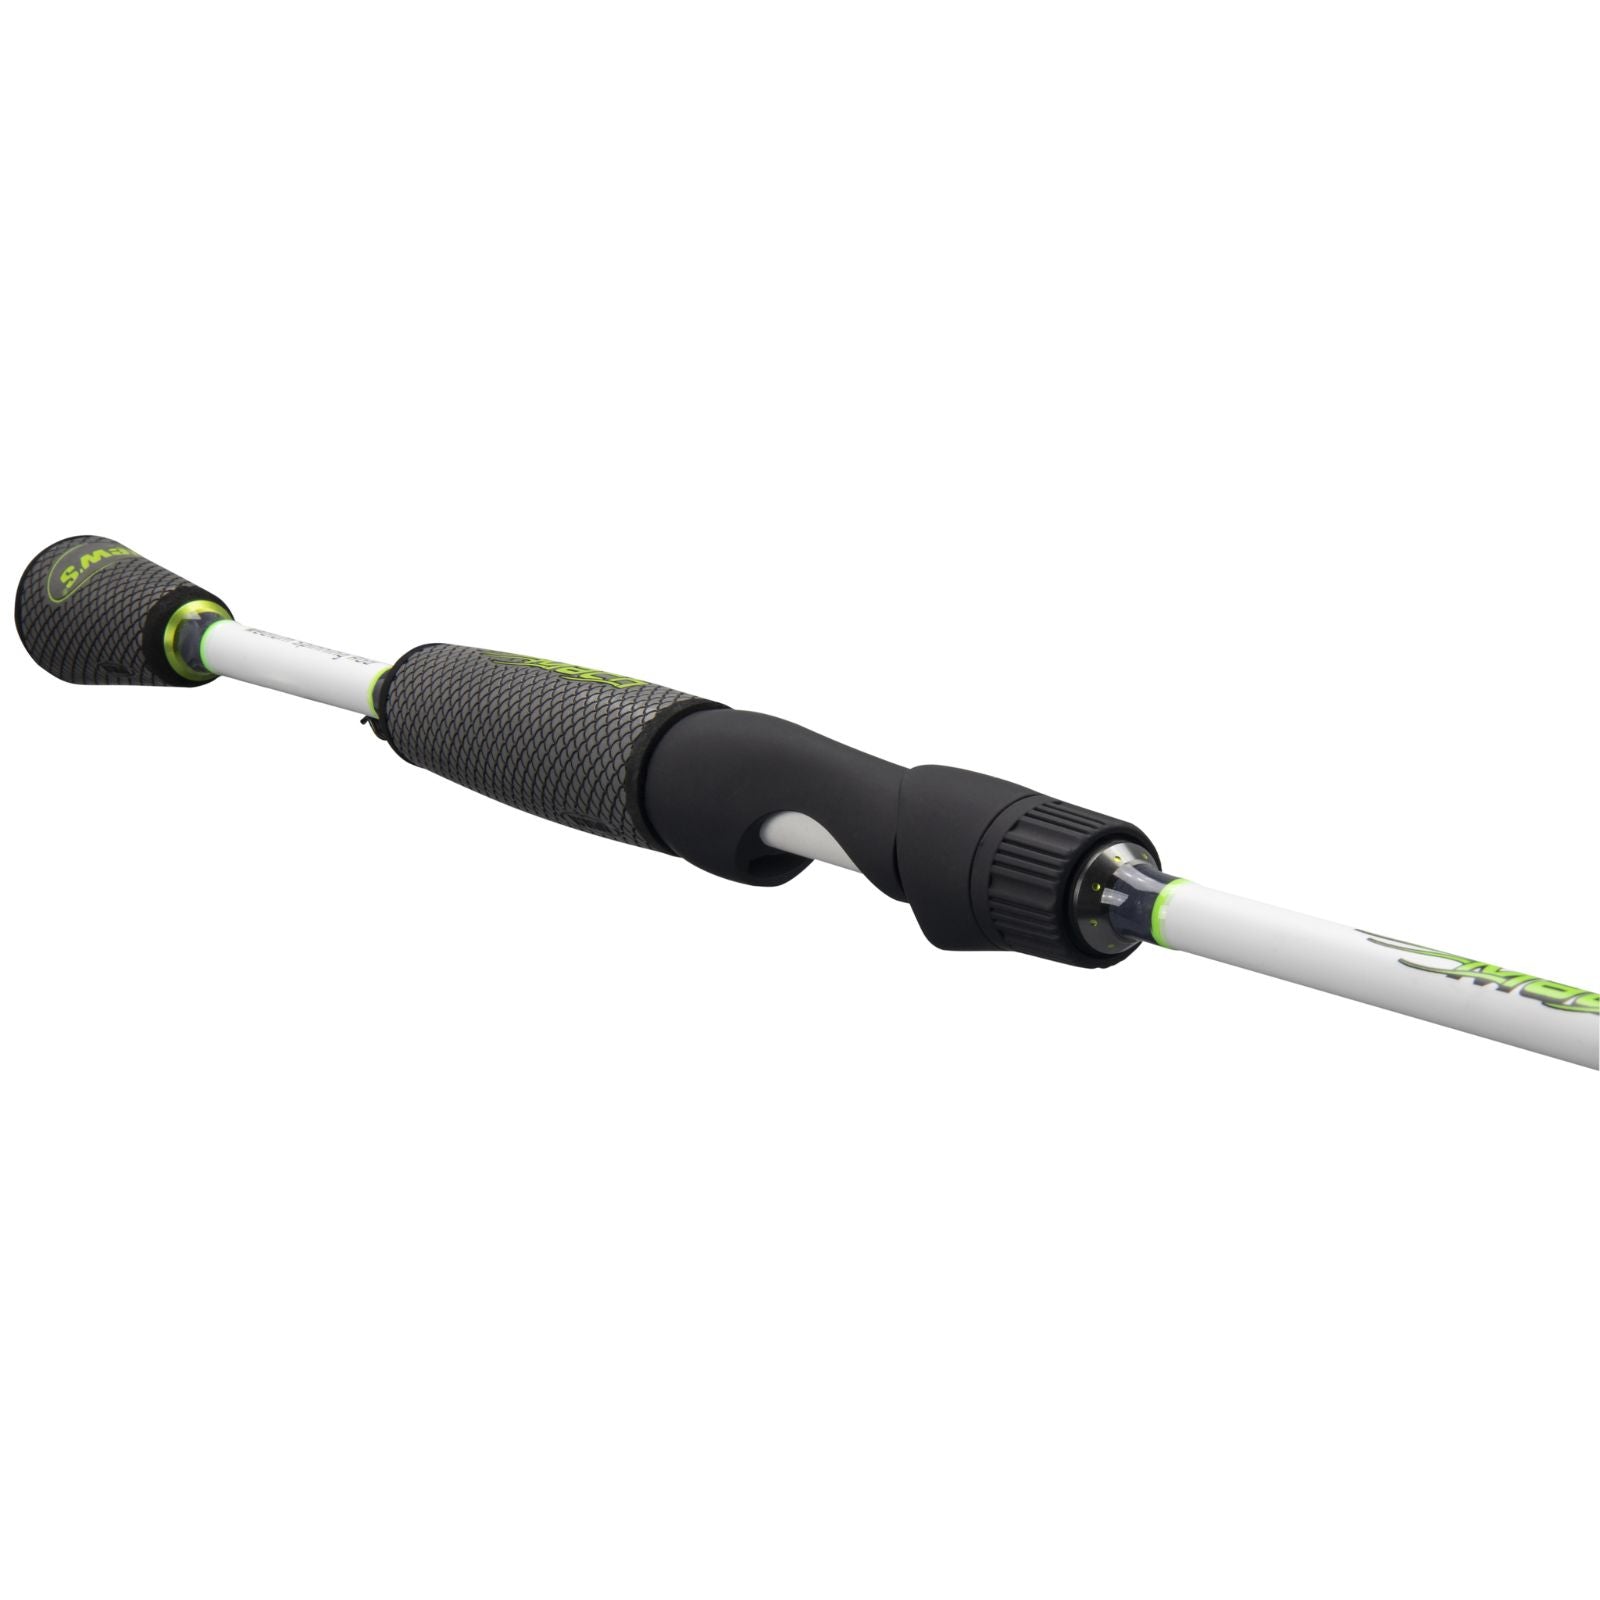 Graphite 6.5ft Lews Mach Speed Stick Winn Split Grip Rod from Fish